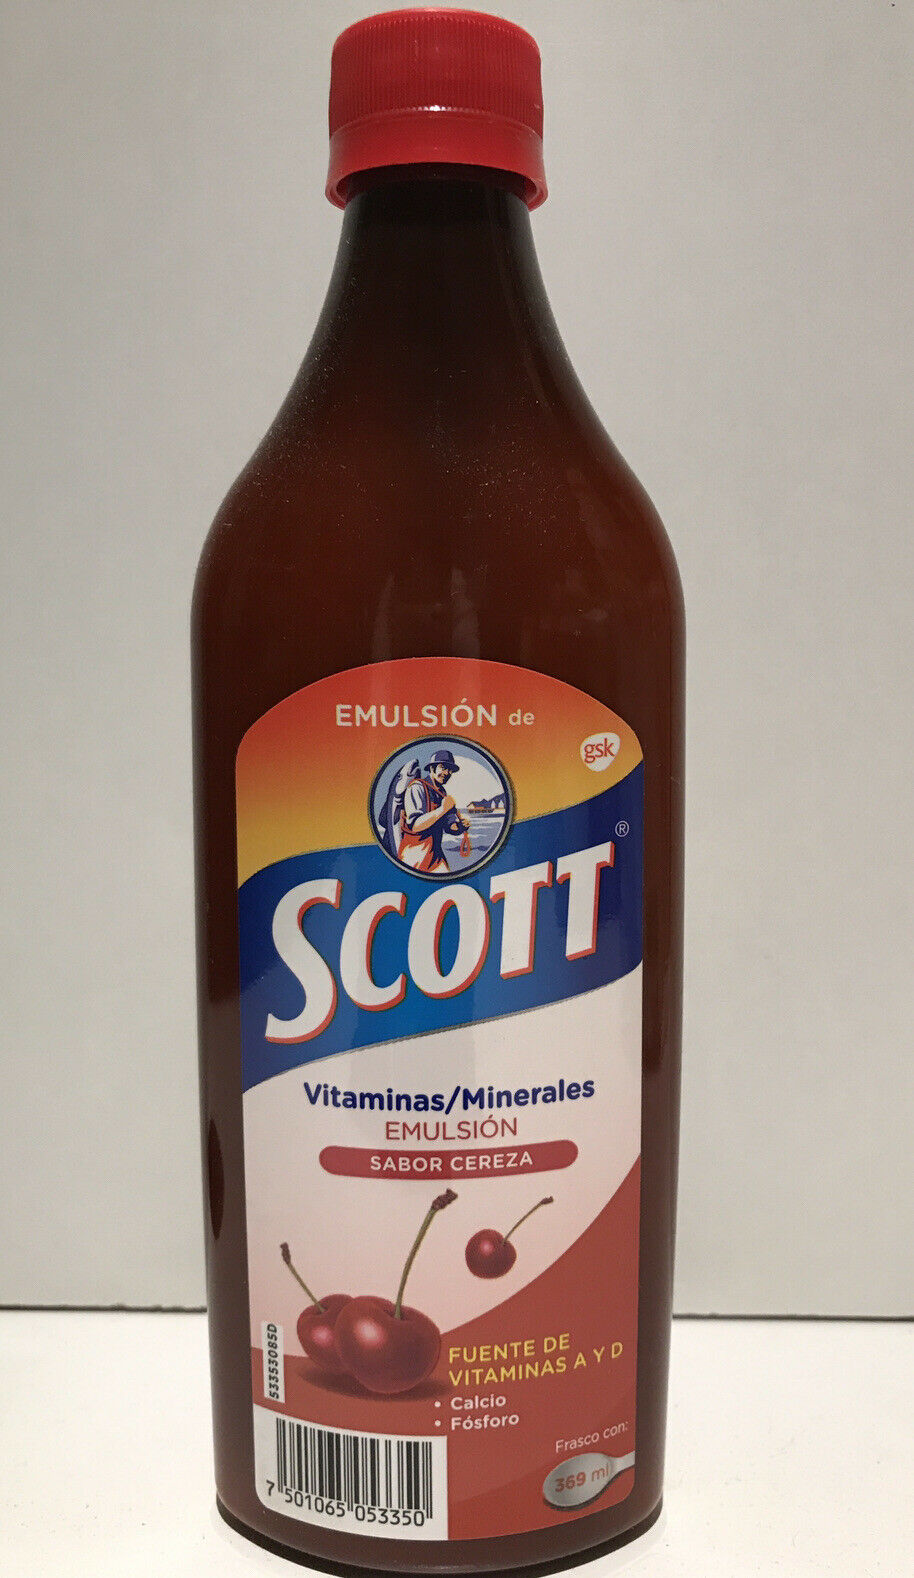 Emulsion de Scott Sabor (1) Tradicional(1)Cherry (1) Frutas Tropicales 3  PACK COMBO / Cod Liver Oil. Traditional flavor. Vitamins A & D. 180ml EACH  